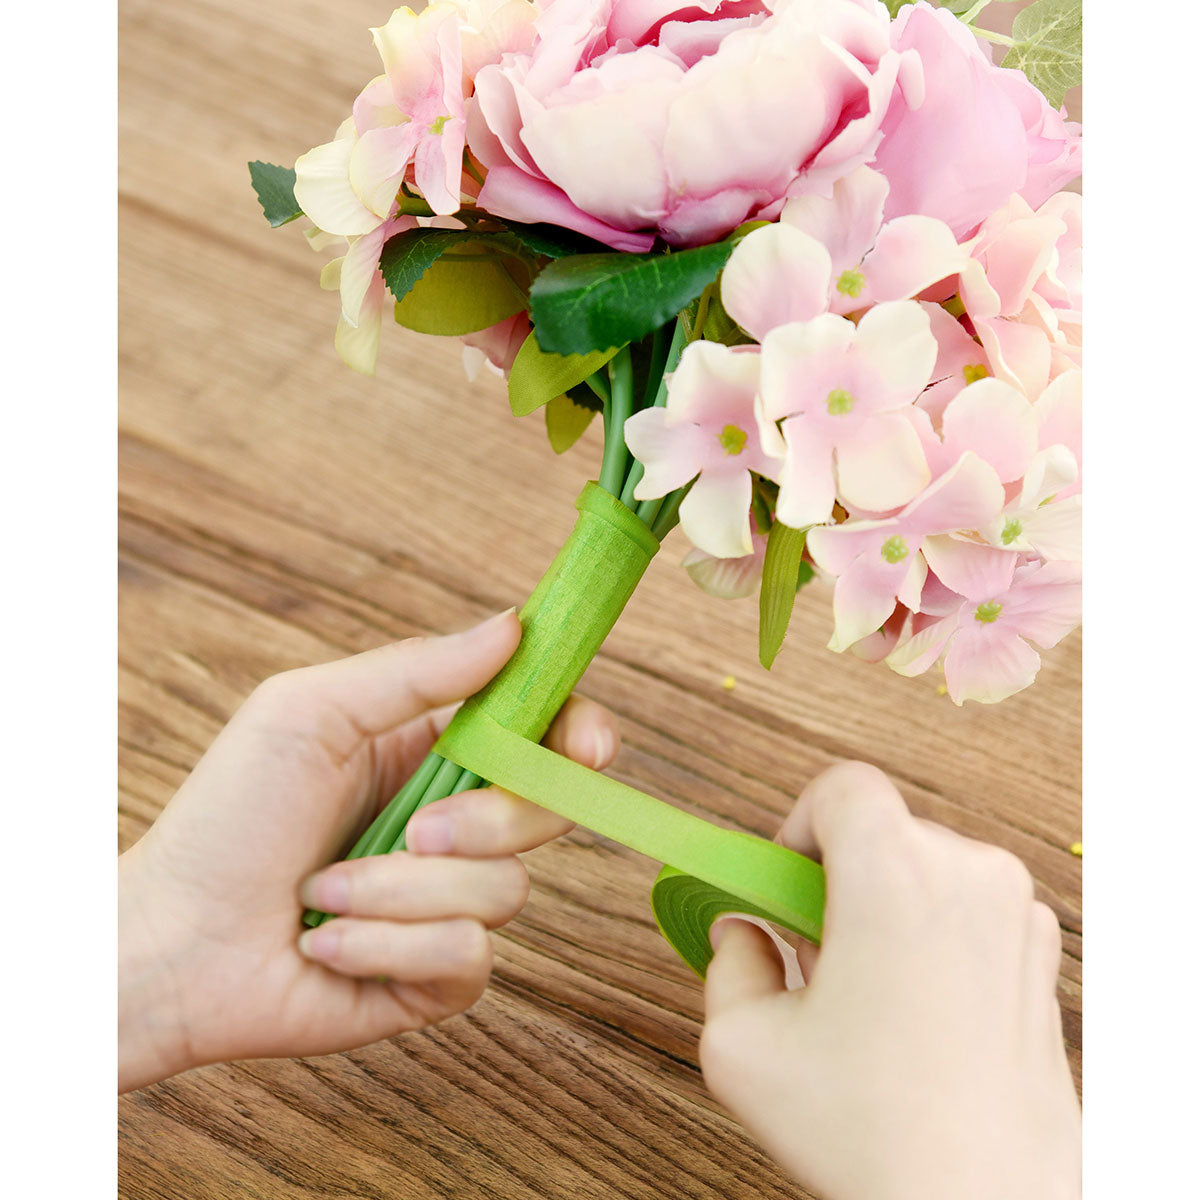 Floral Tape Green Clear Color Florist Tape for Floral Arranging Craft  Projects Corsages Bouquet Stem Wrap